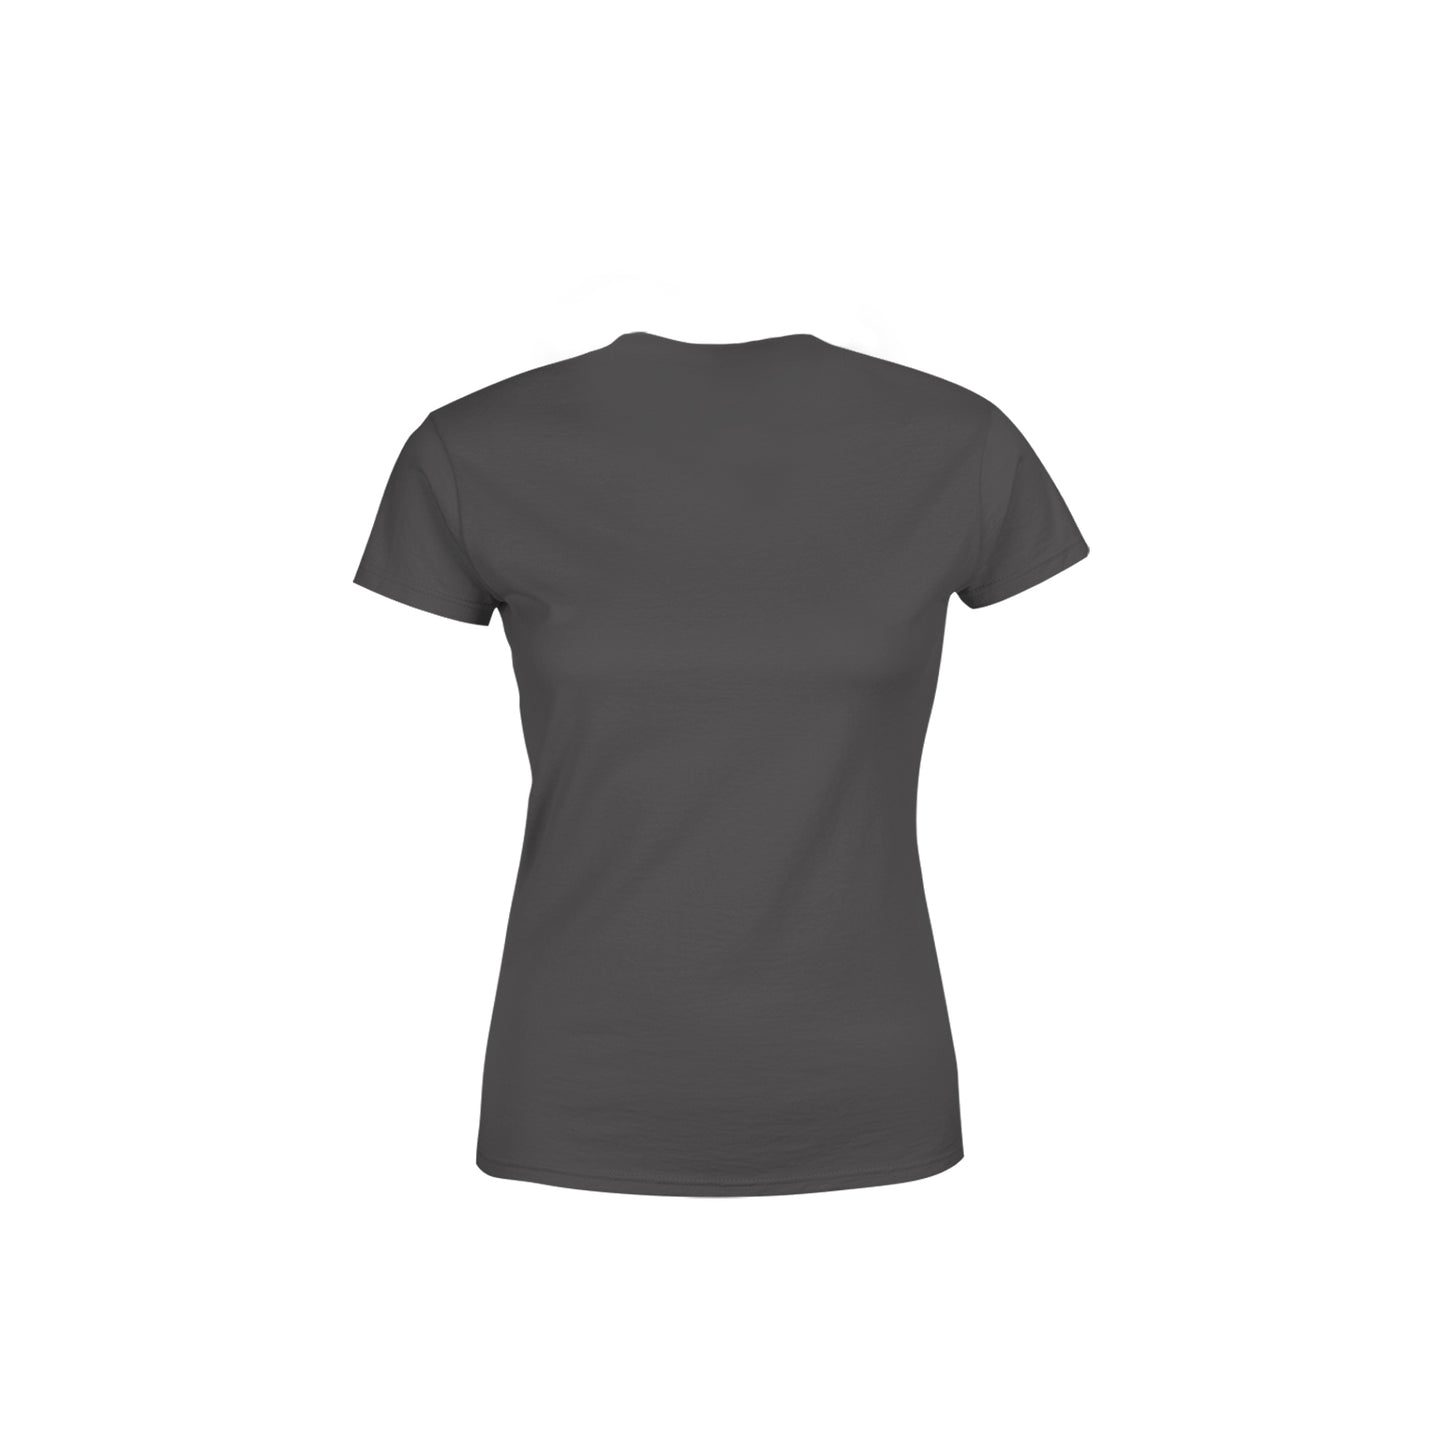 01 Number Women's T-Shirt (Charcoal Grey)